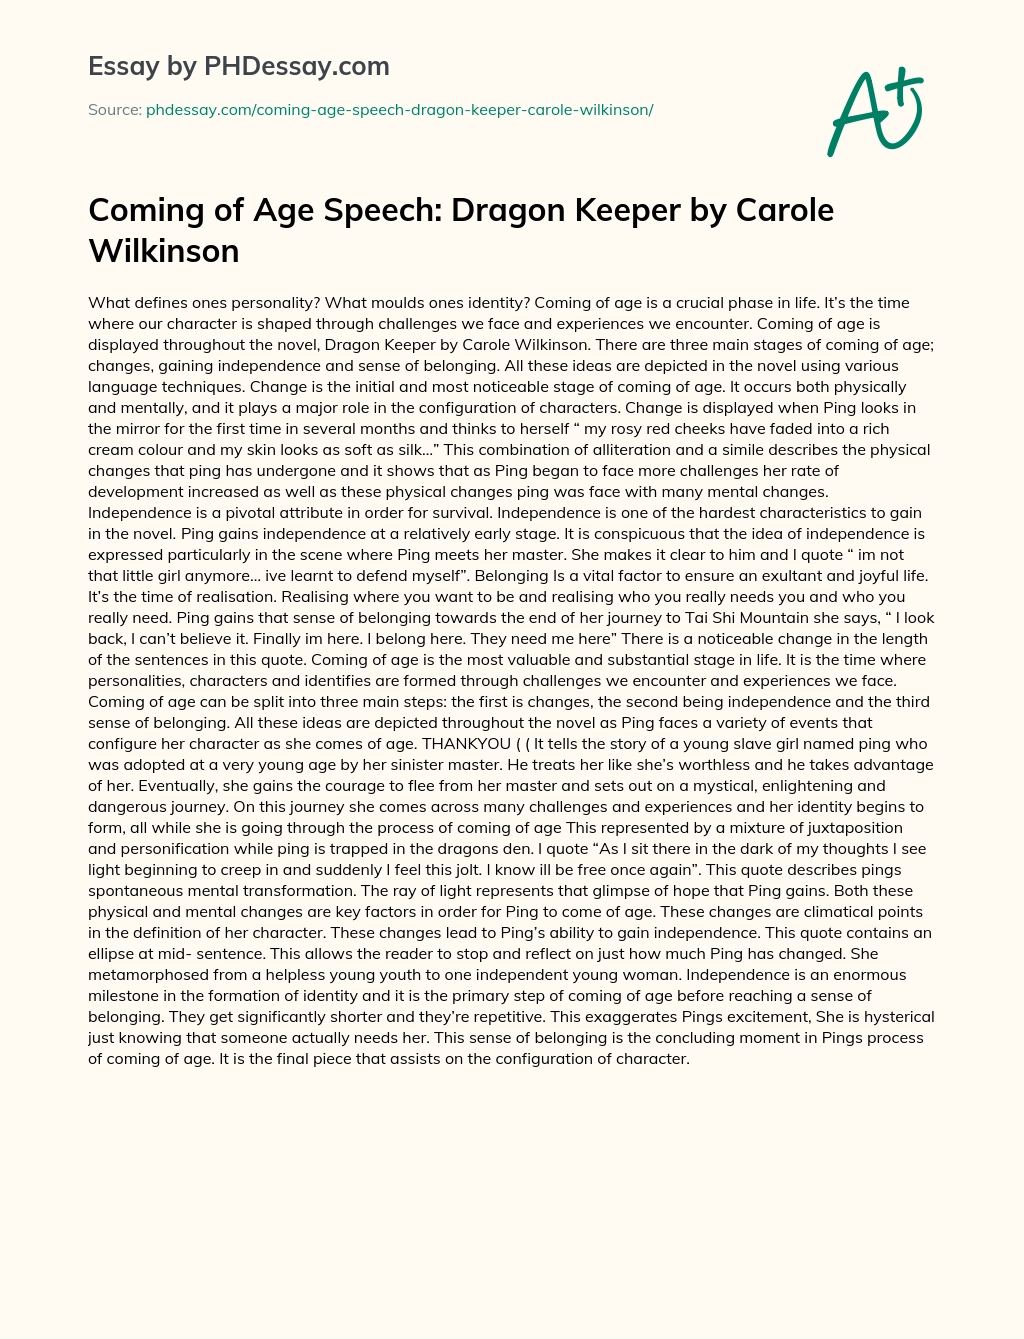 Coming of Age Speech: Dragon Keeper by Carole Wilkinson essay